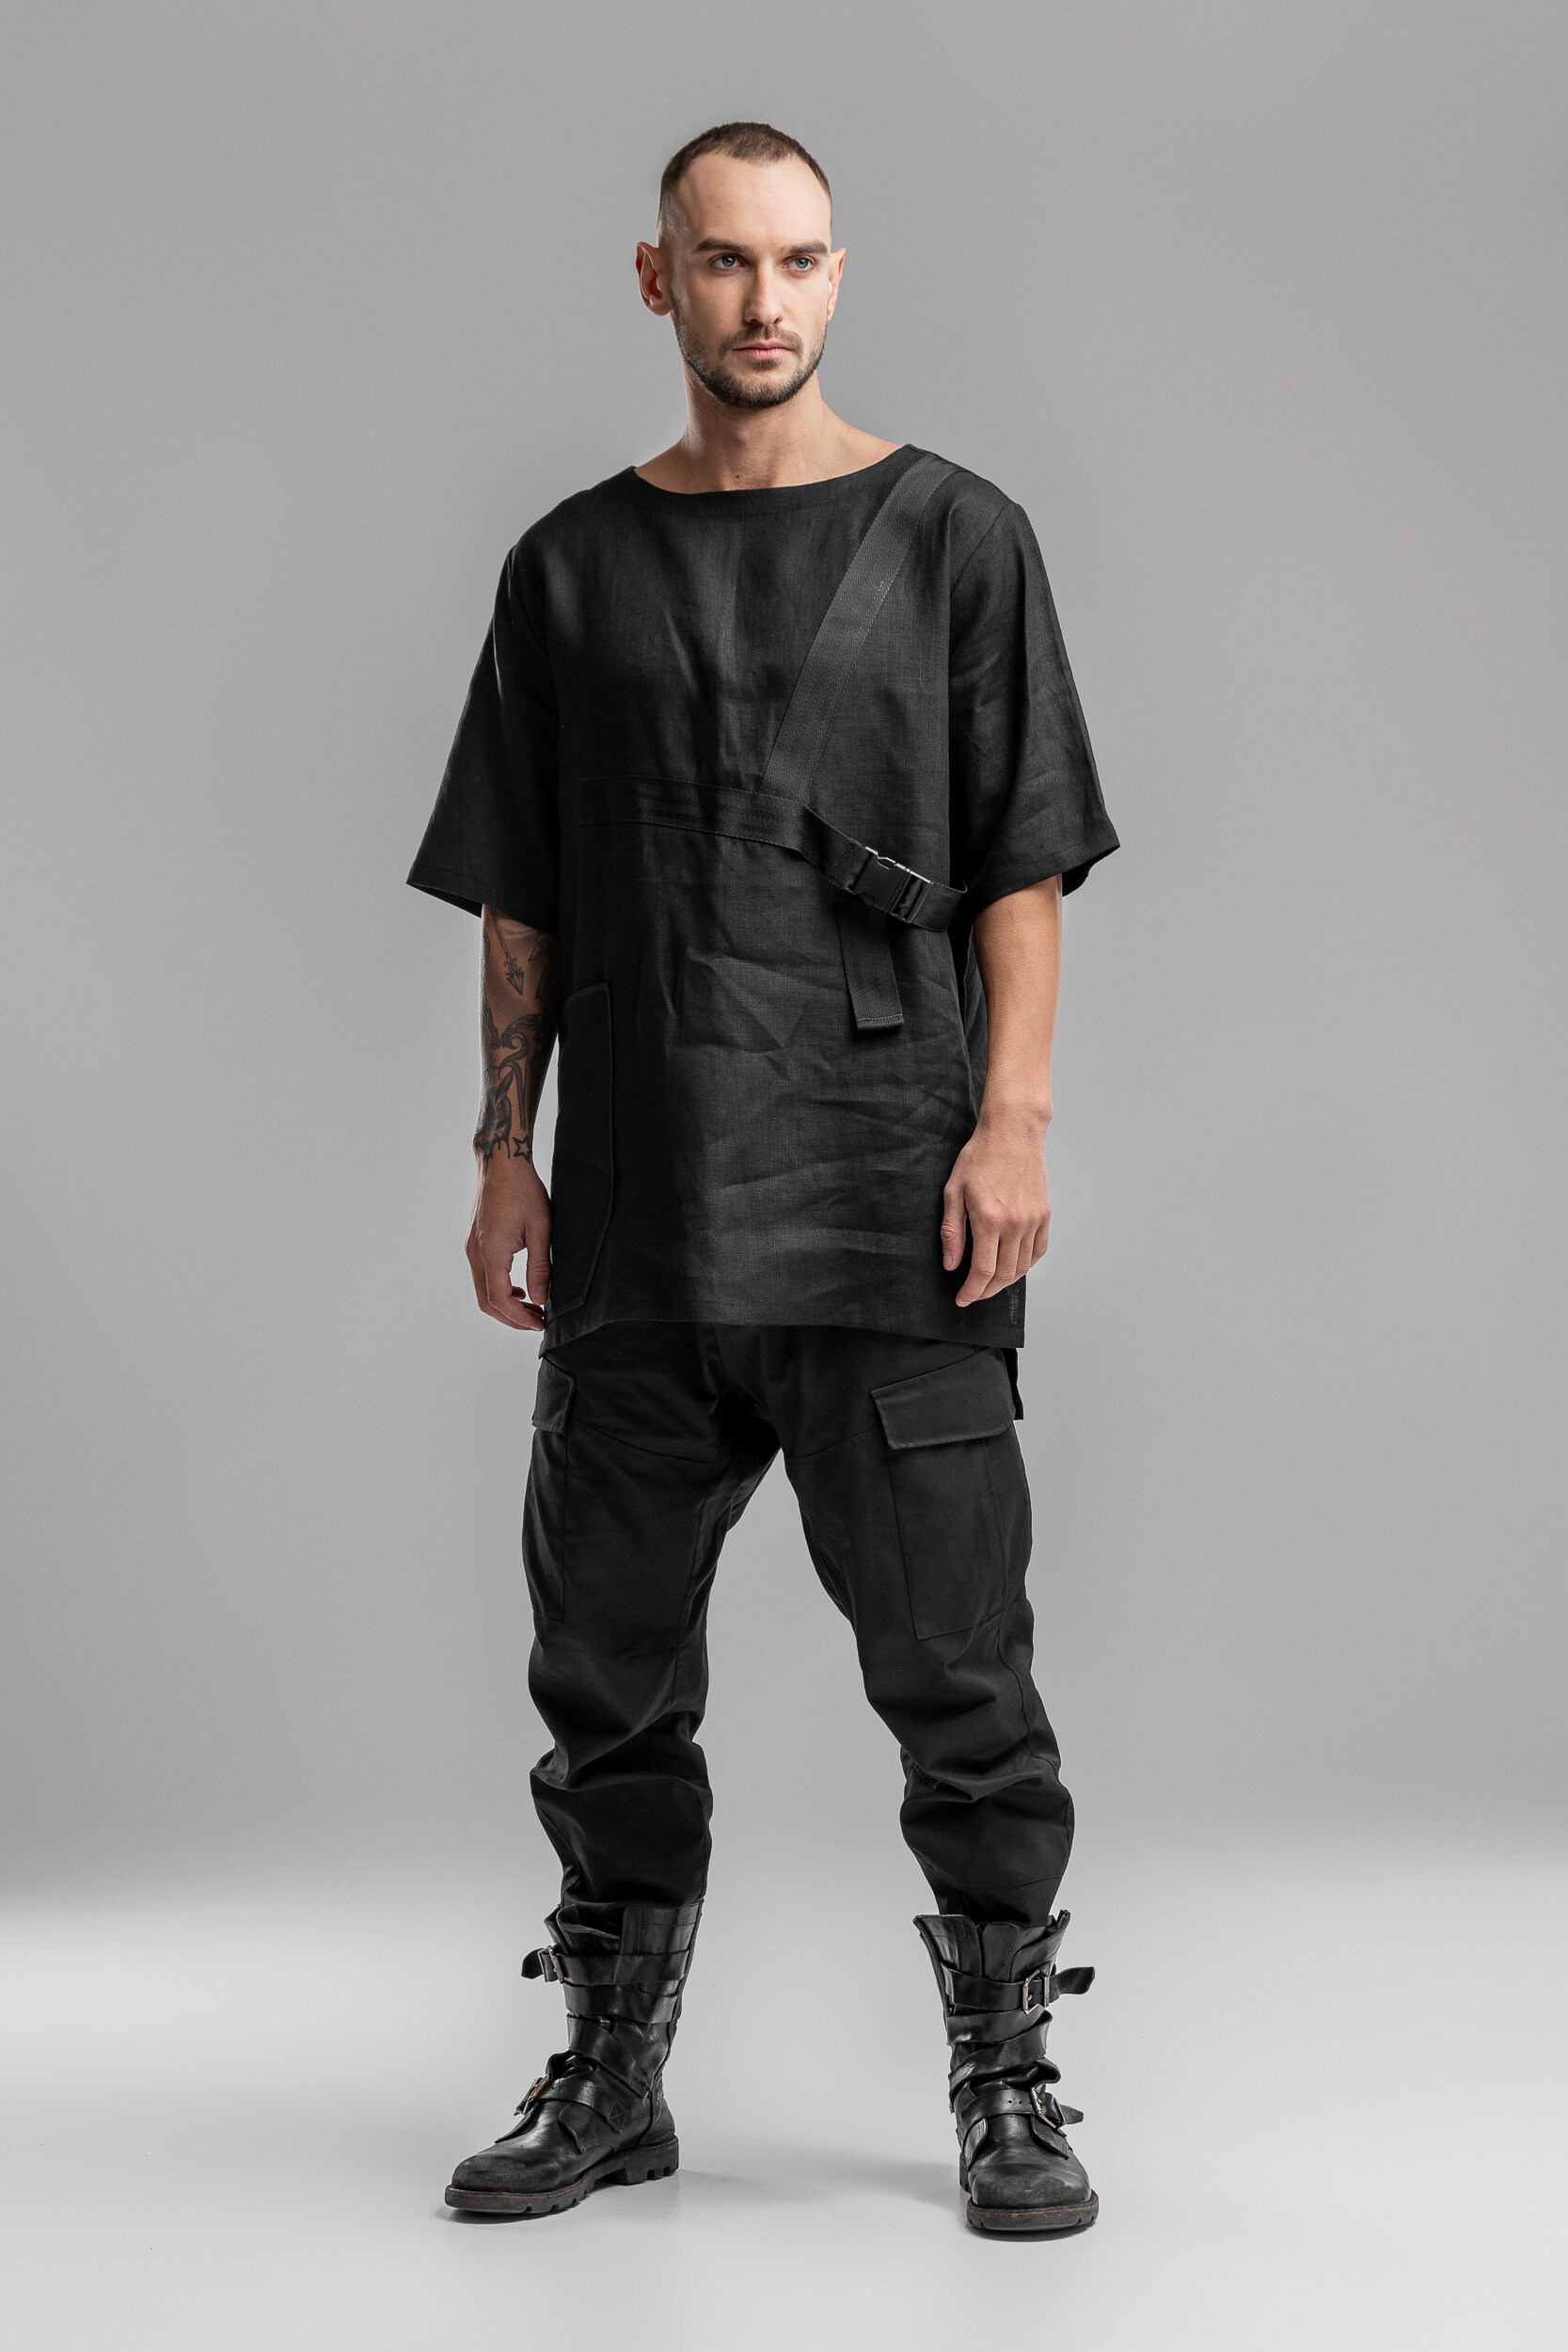 steampunk sci-fi clothing casual street style A0301 men black geometric top punk rock tee Linen oversized T shirt